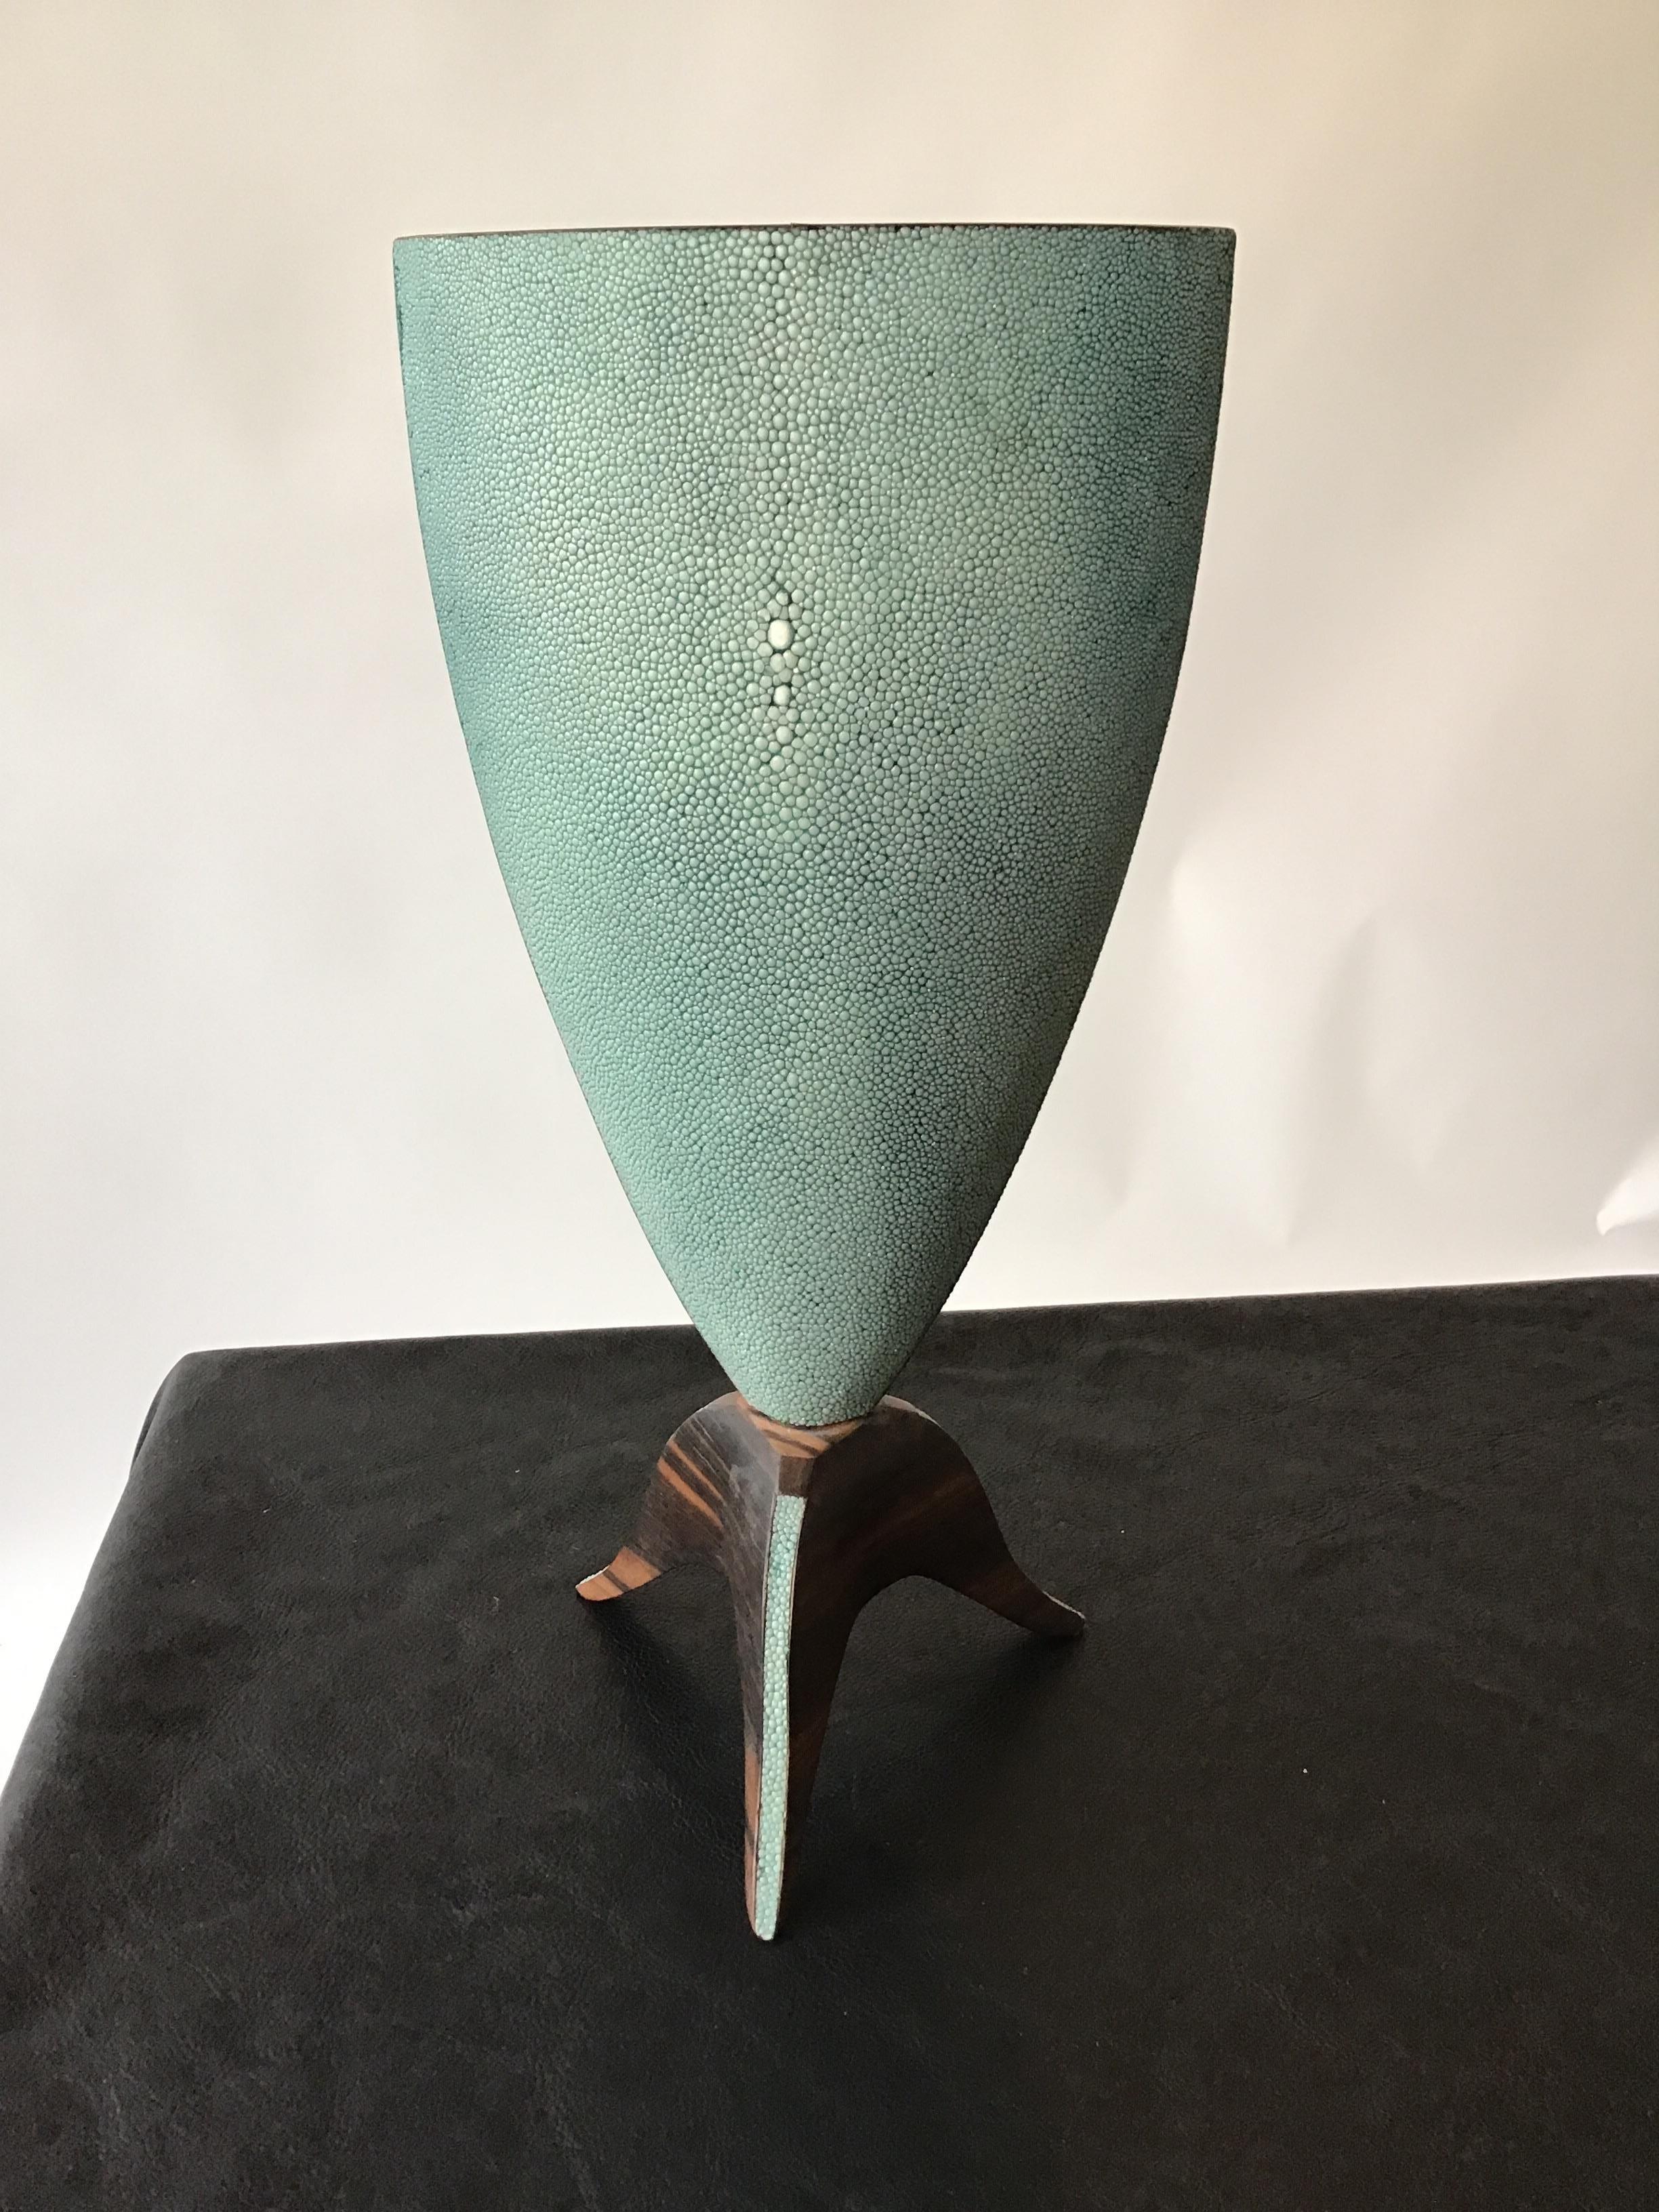 R & Y Augousti shagreen vase. From a Southampton, NY estate.